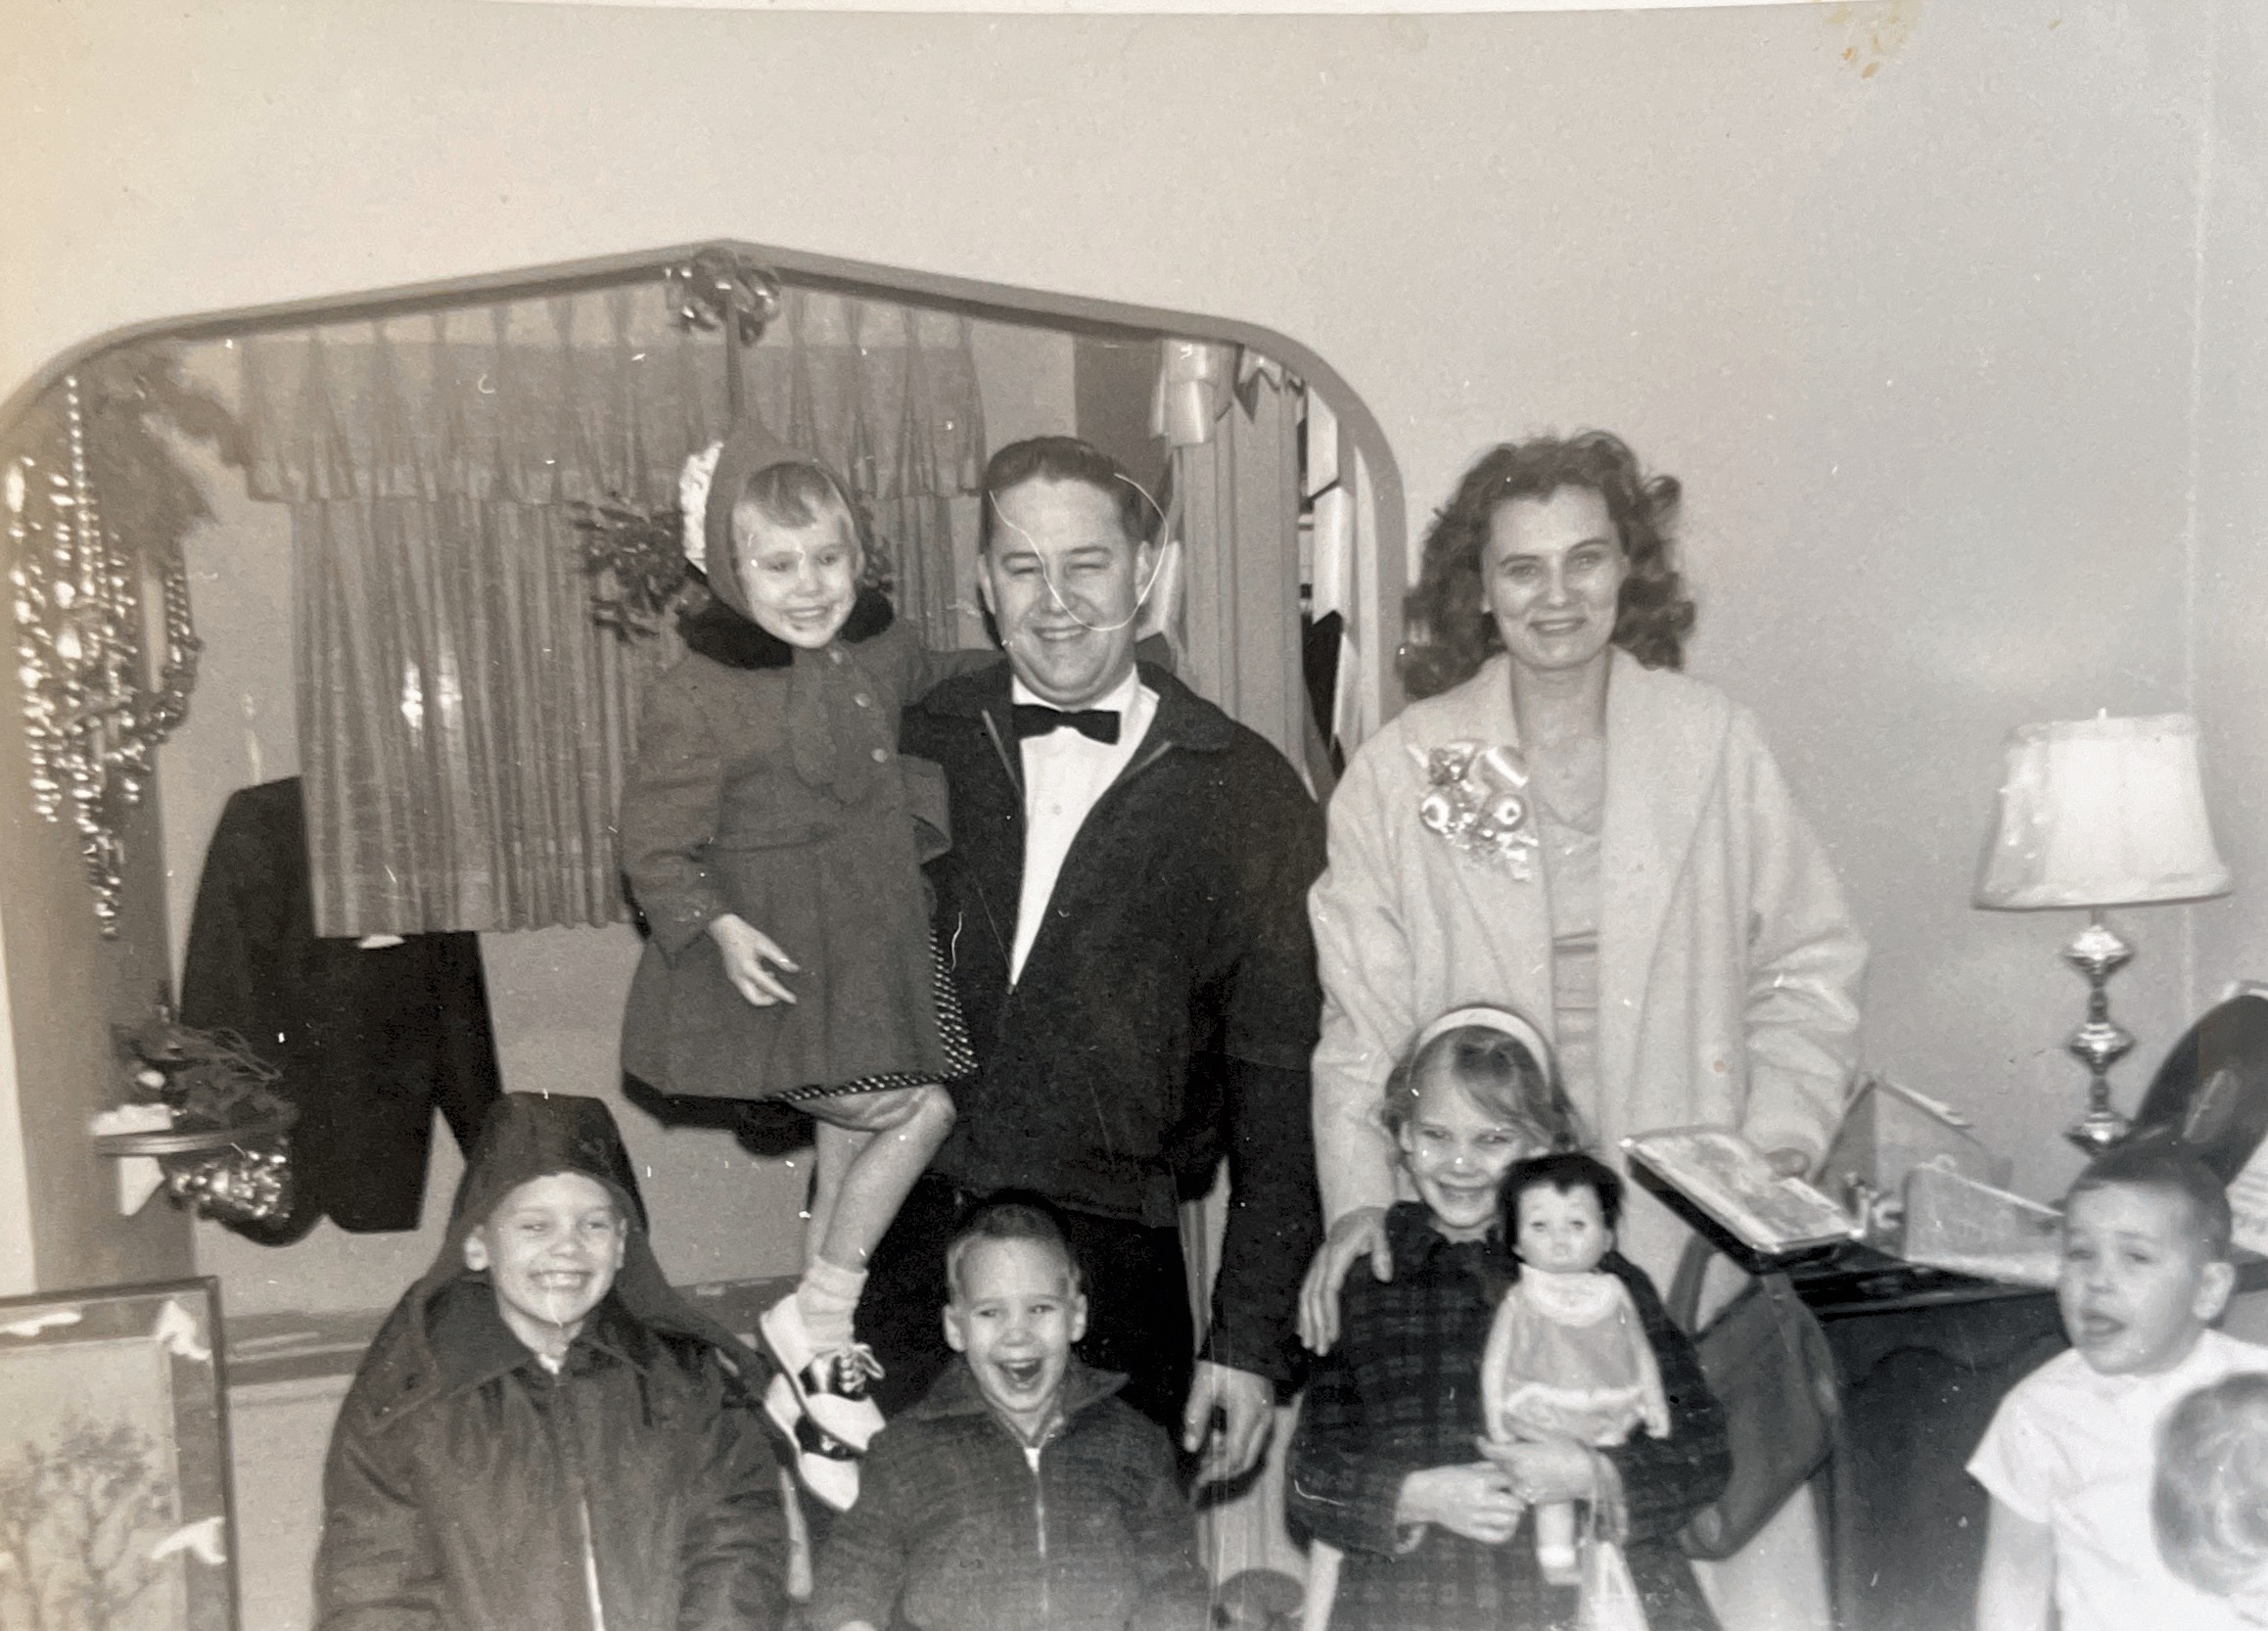 Darlene, George & family Christmas 1964 at Sharon’s